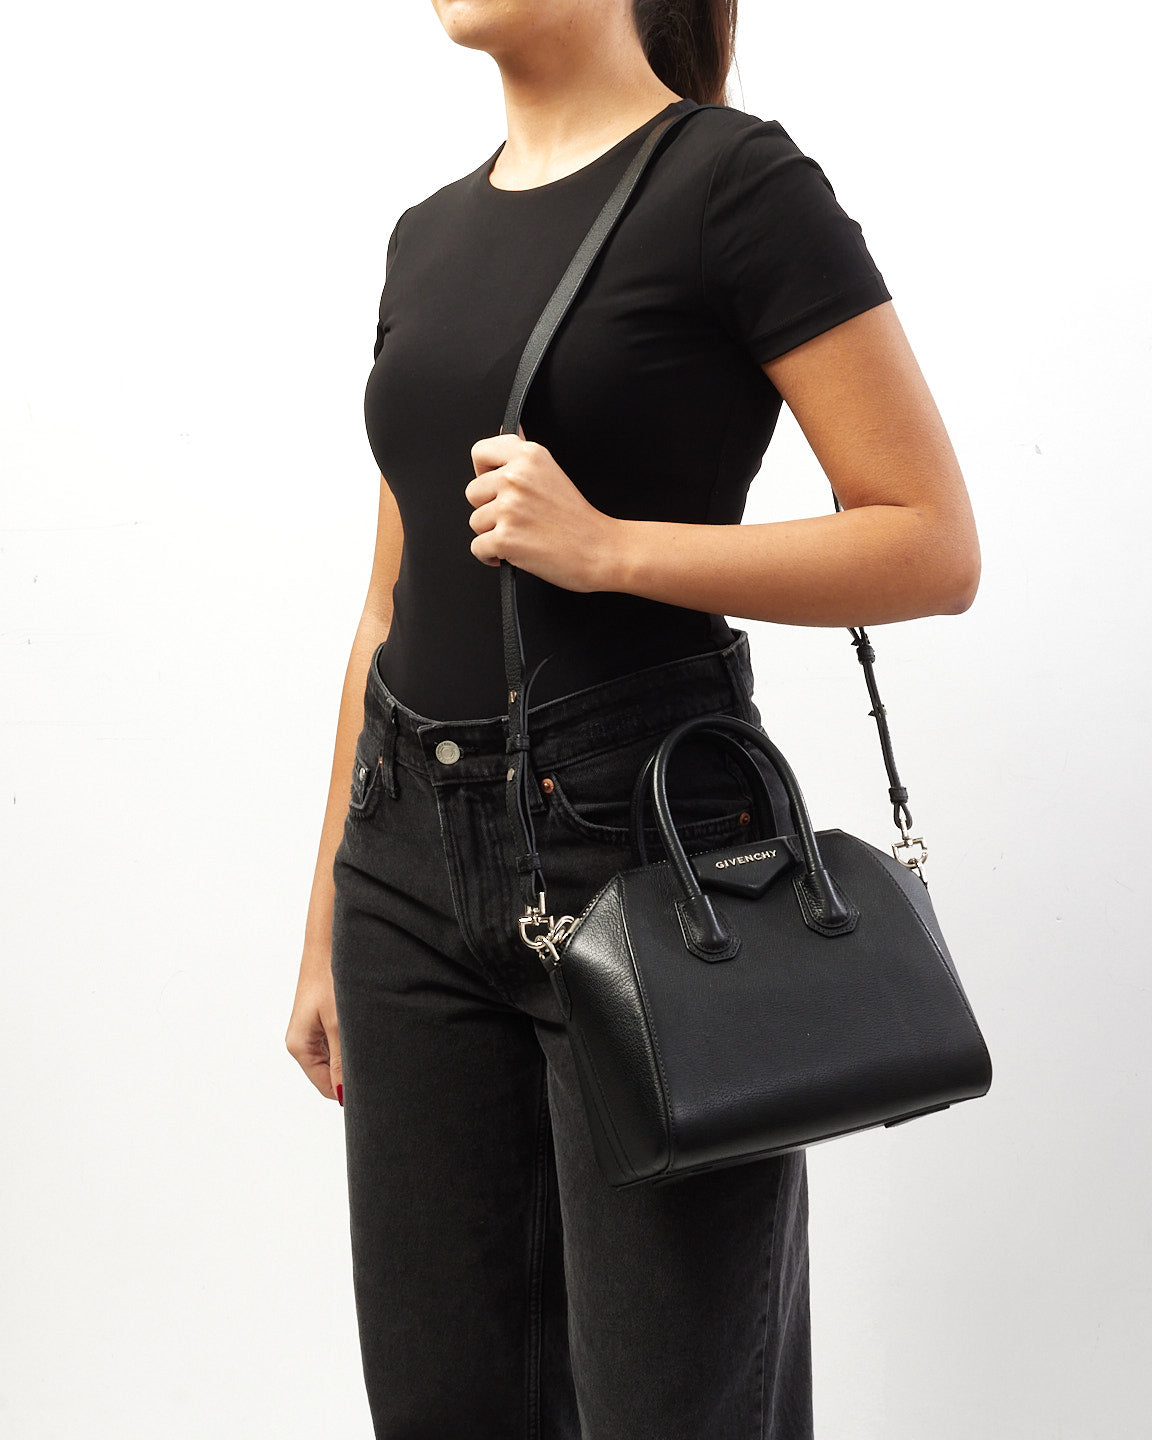 Givenchy Black Grained Leather Mini Antigona Bag